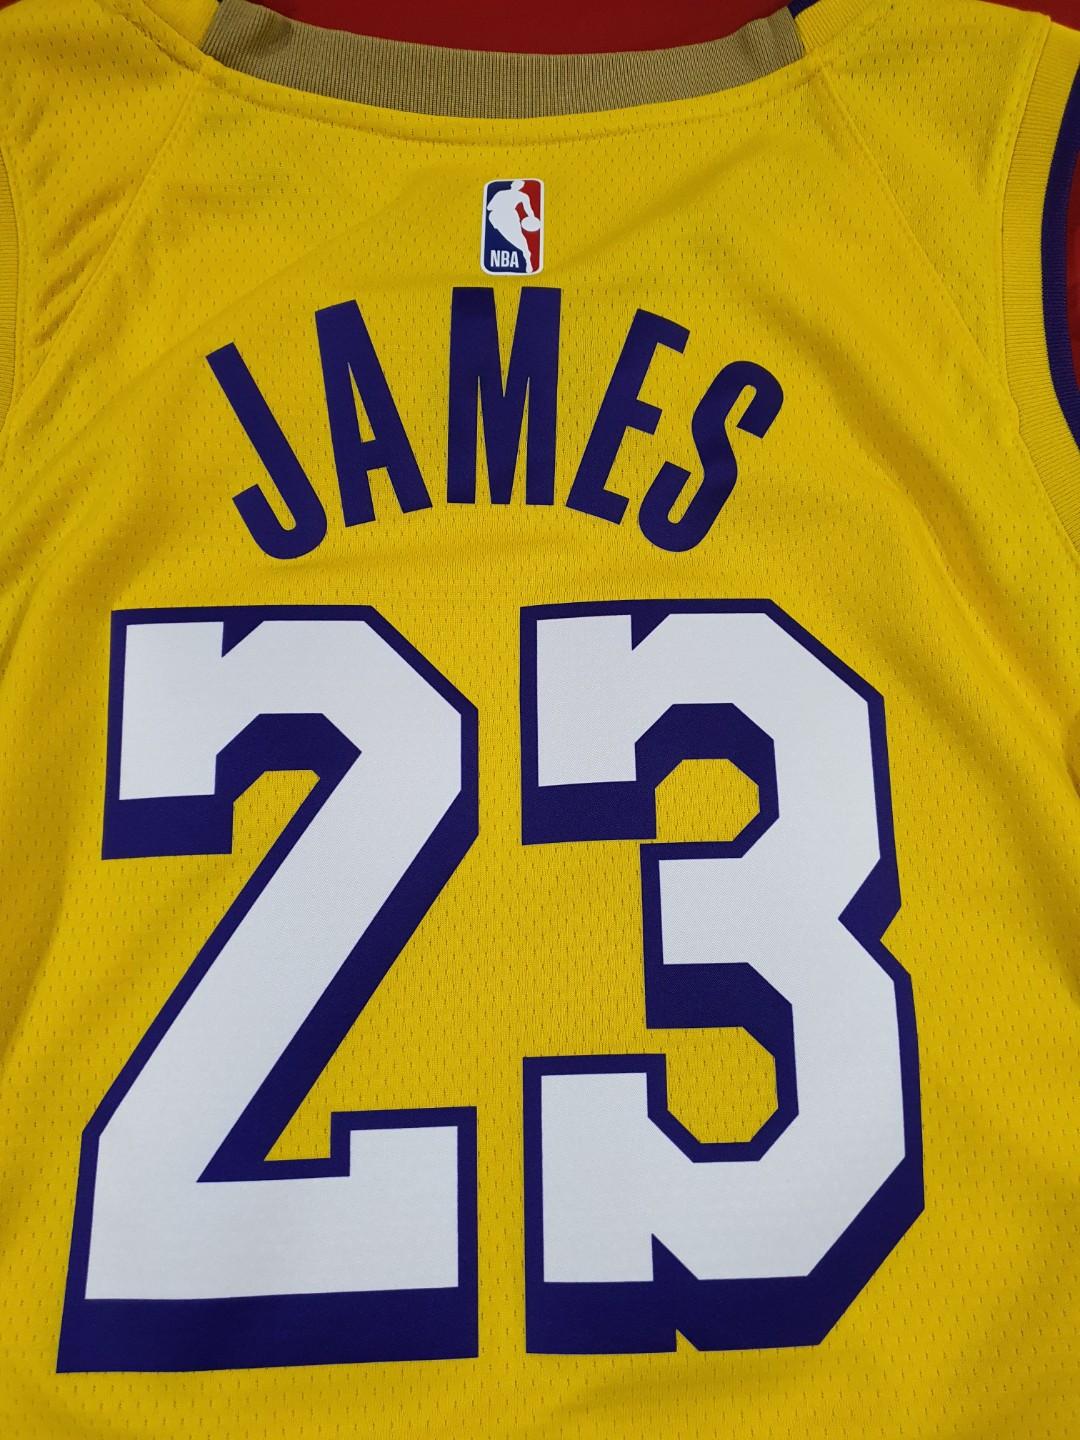 Lebron James #23 Los Angeles Lakers Jersey Size 56 Nba Kobe Basketball –  Rare_Wear_Attire